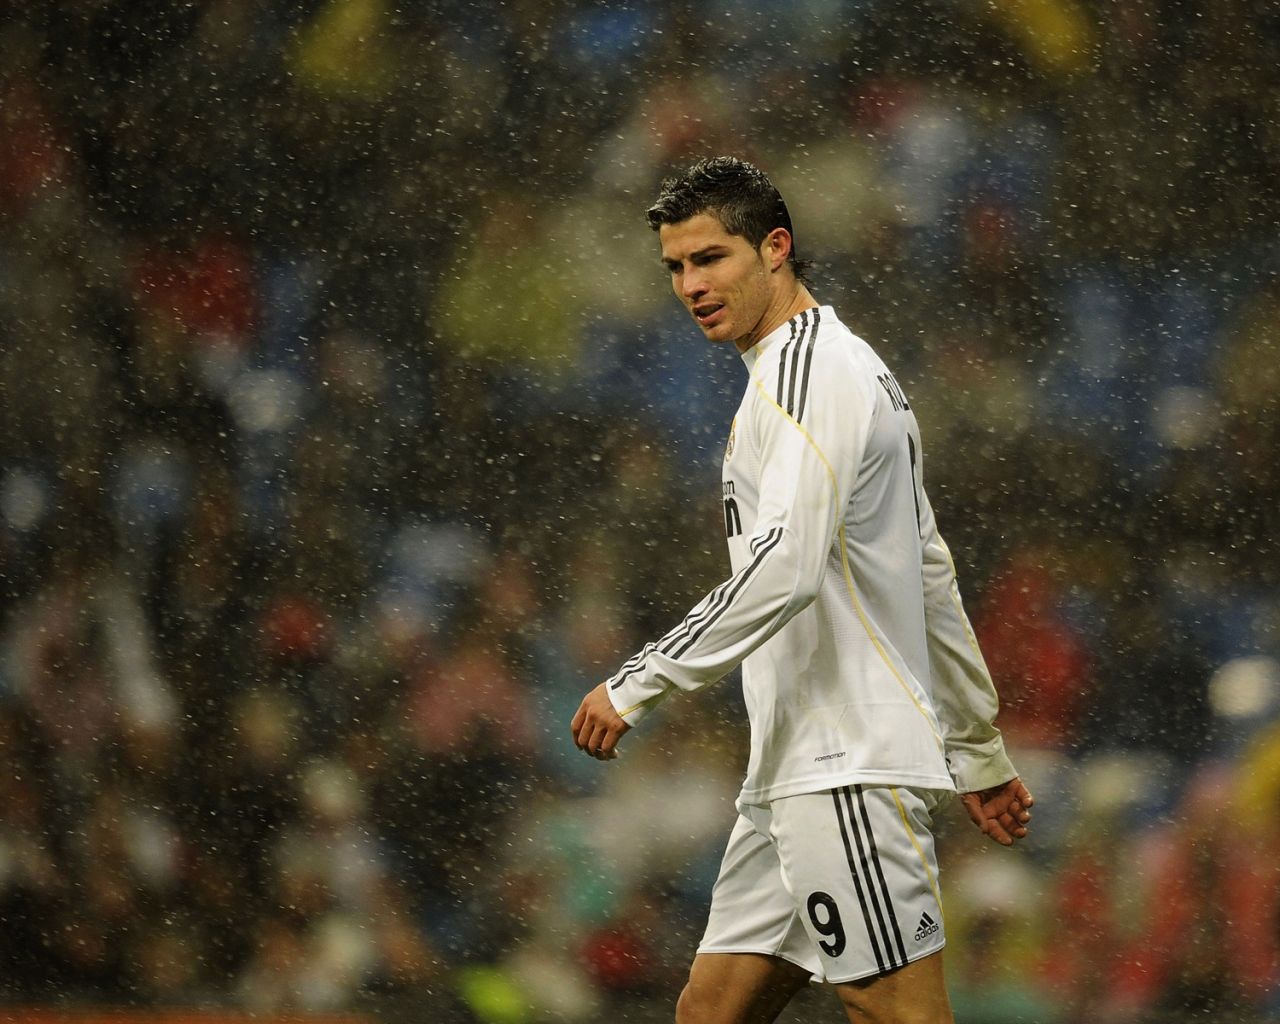 Cristiano Ronaldo Wallpaper 1080p - WallpaperSafari1280 x 1024